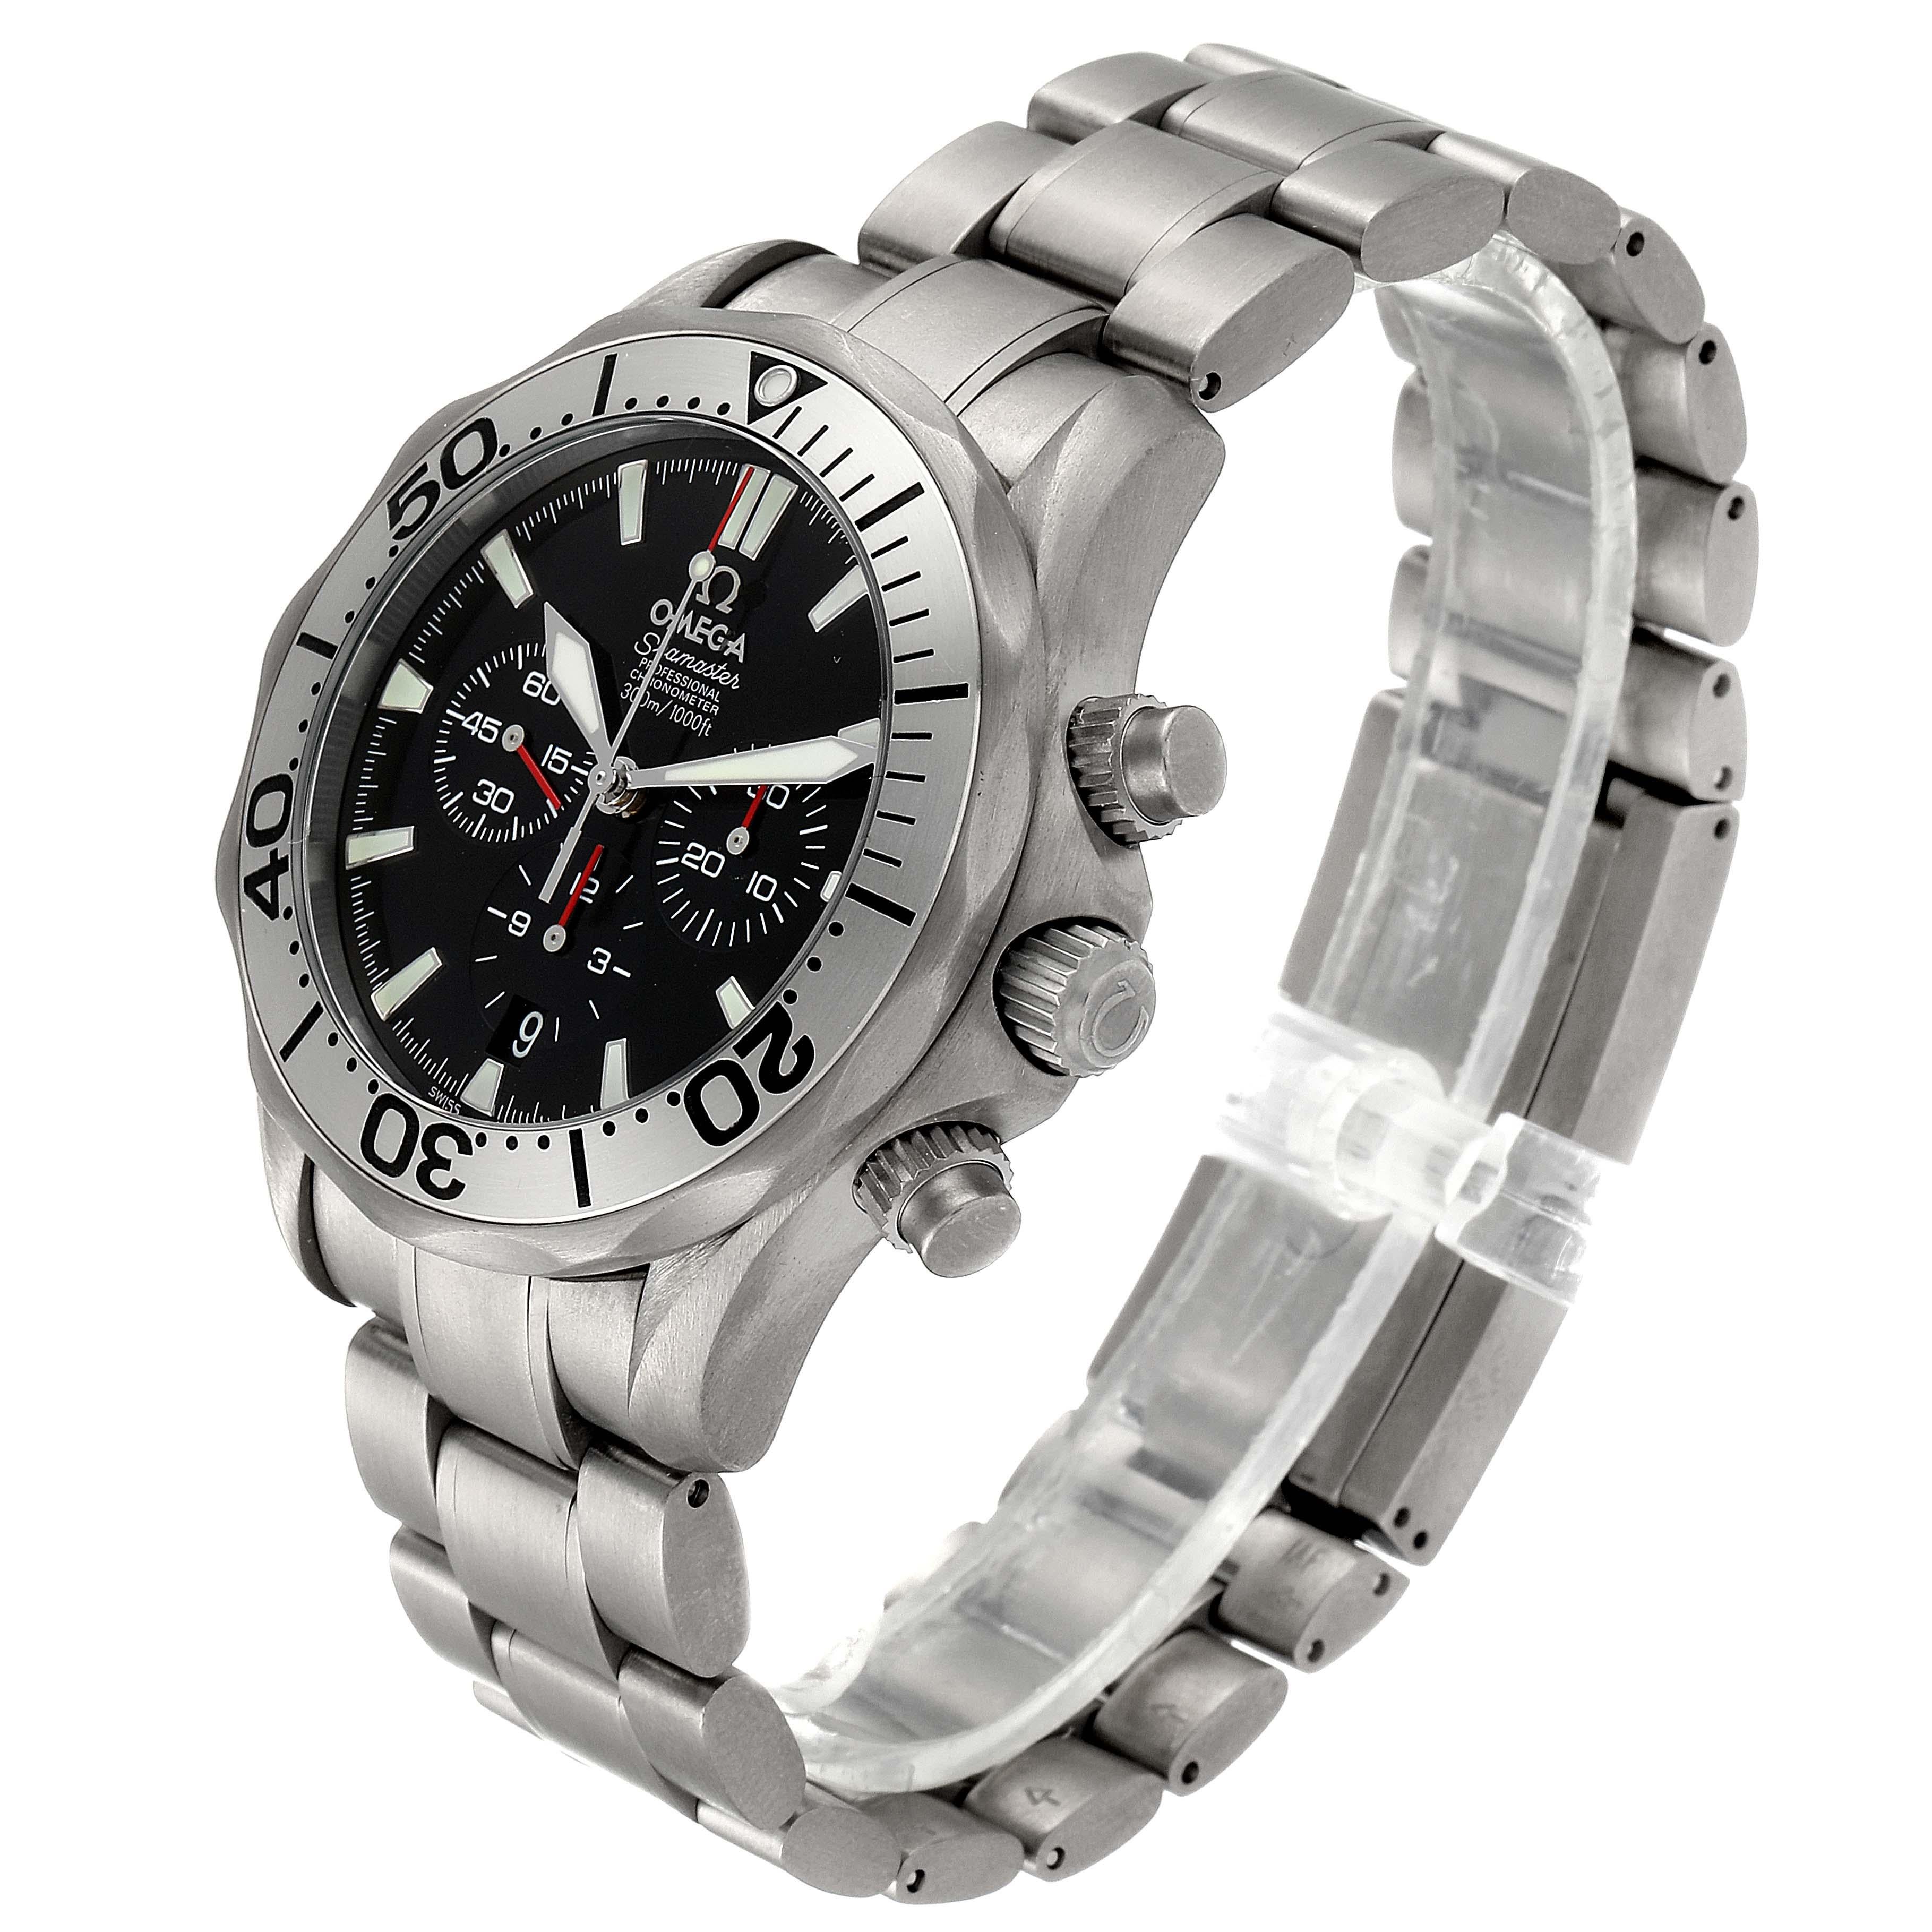 Omega Seamaster Diver Chronograph Titanium Mens Watch 2293.52.00 For Sale 1